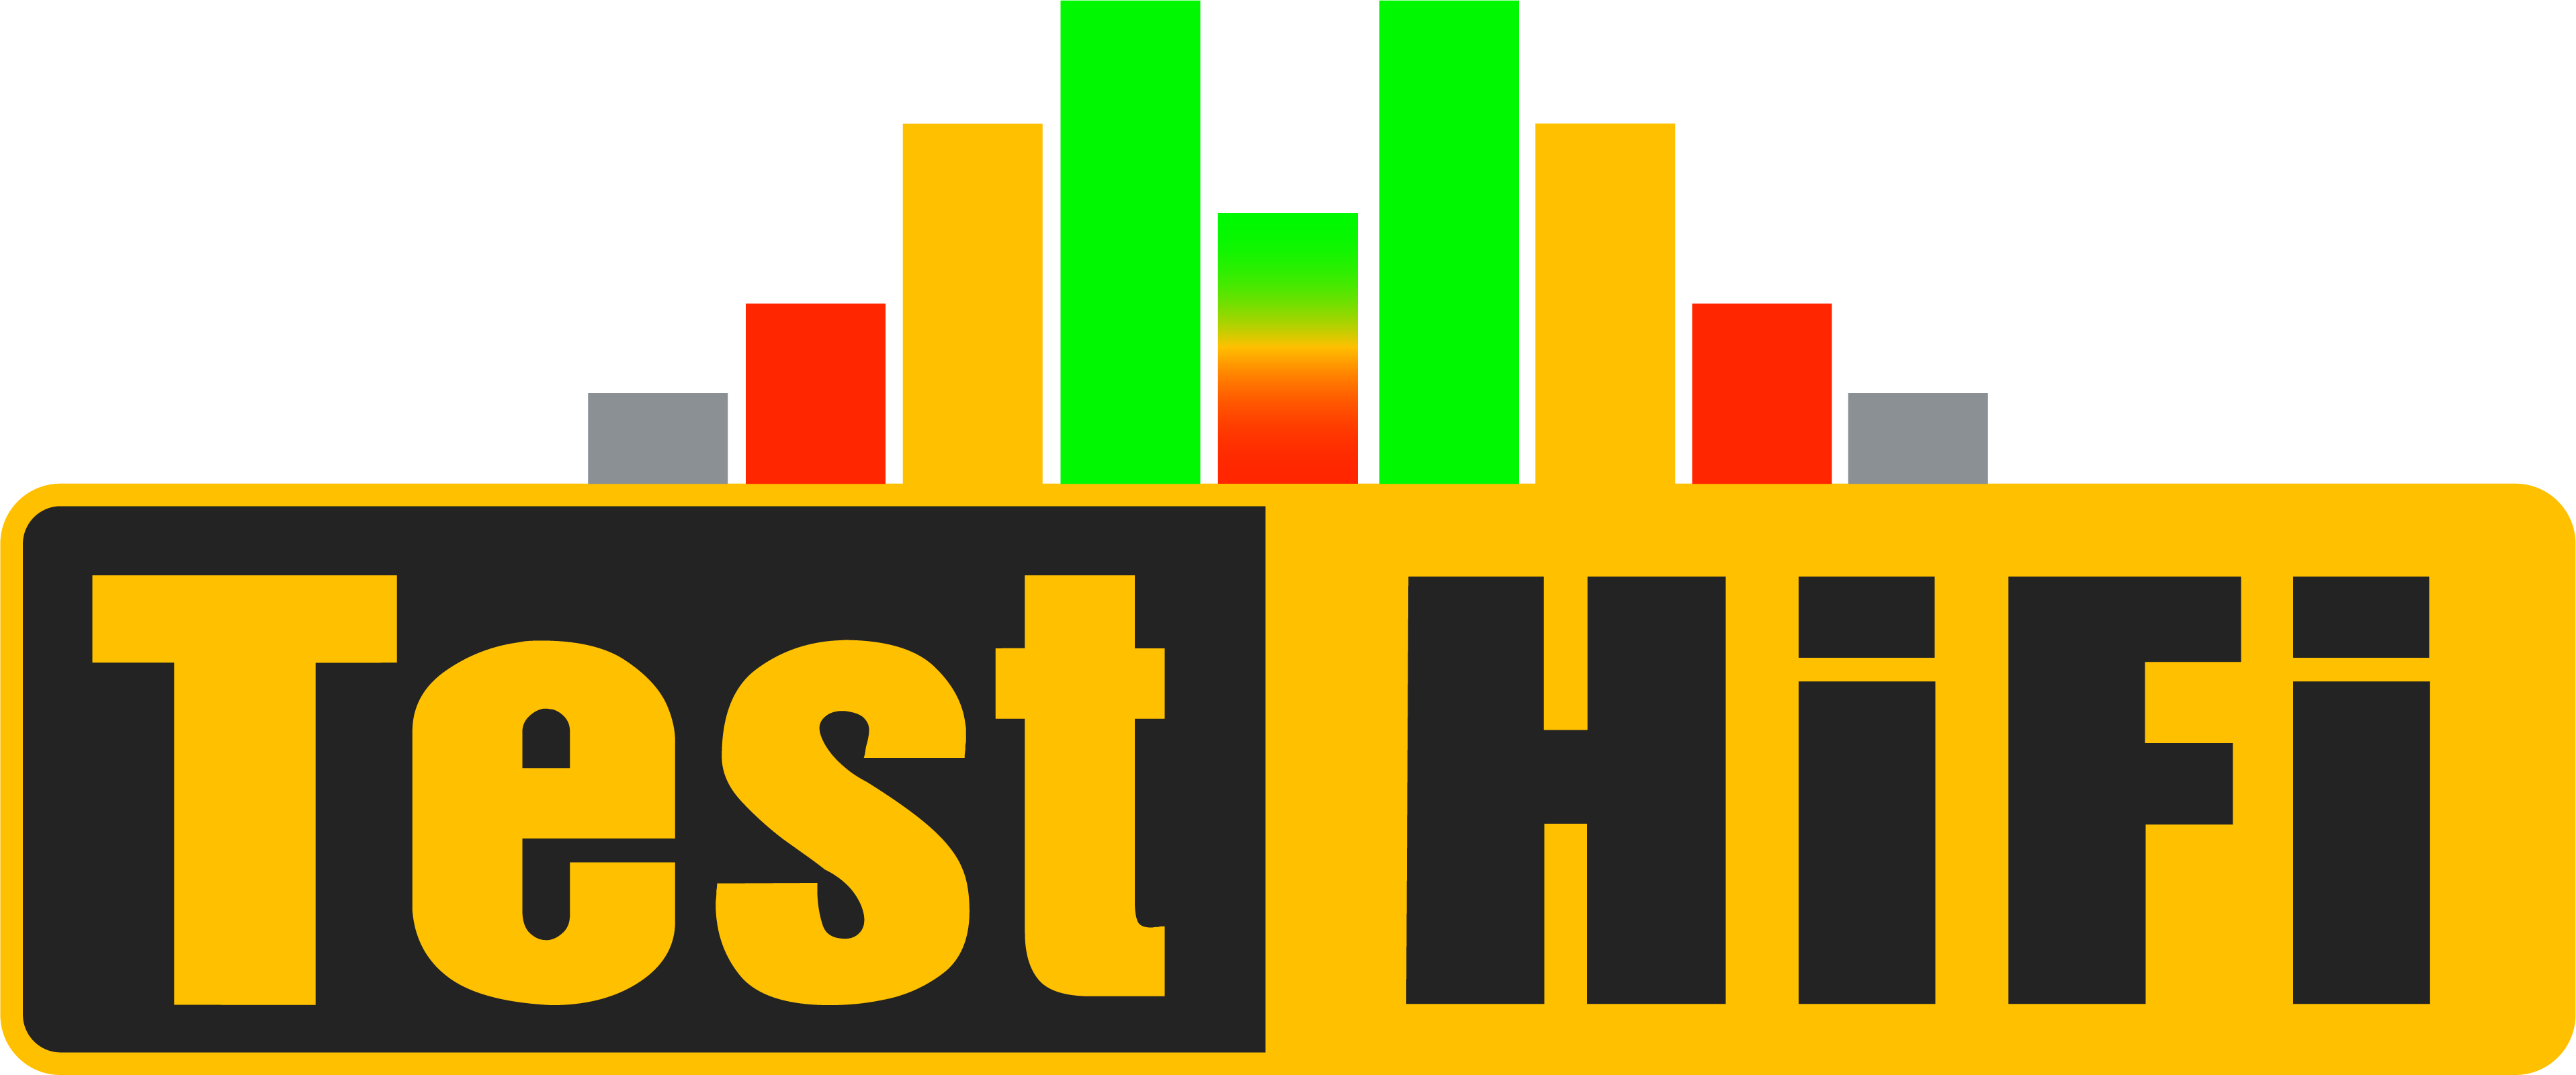 TestHiFi tests hifi capability. High Fidelity musik, sound or audio quality.